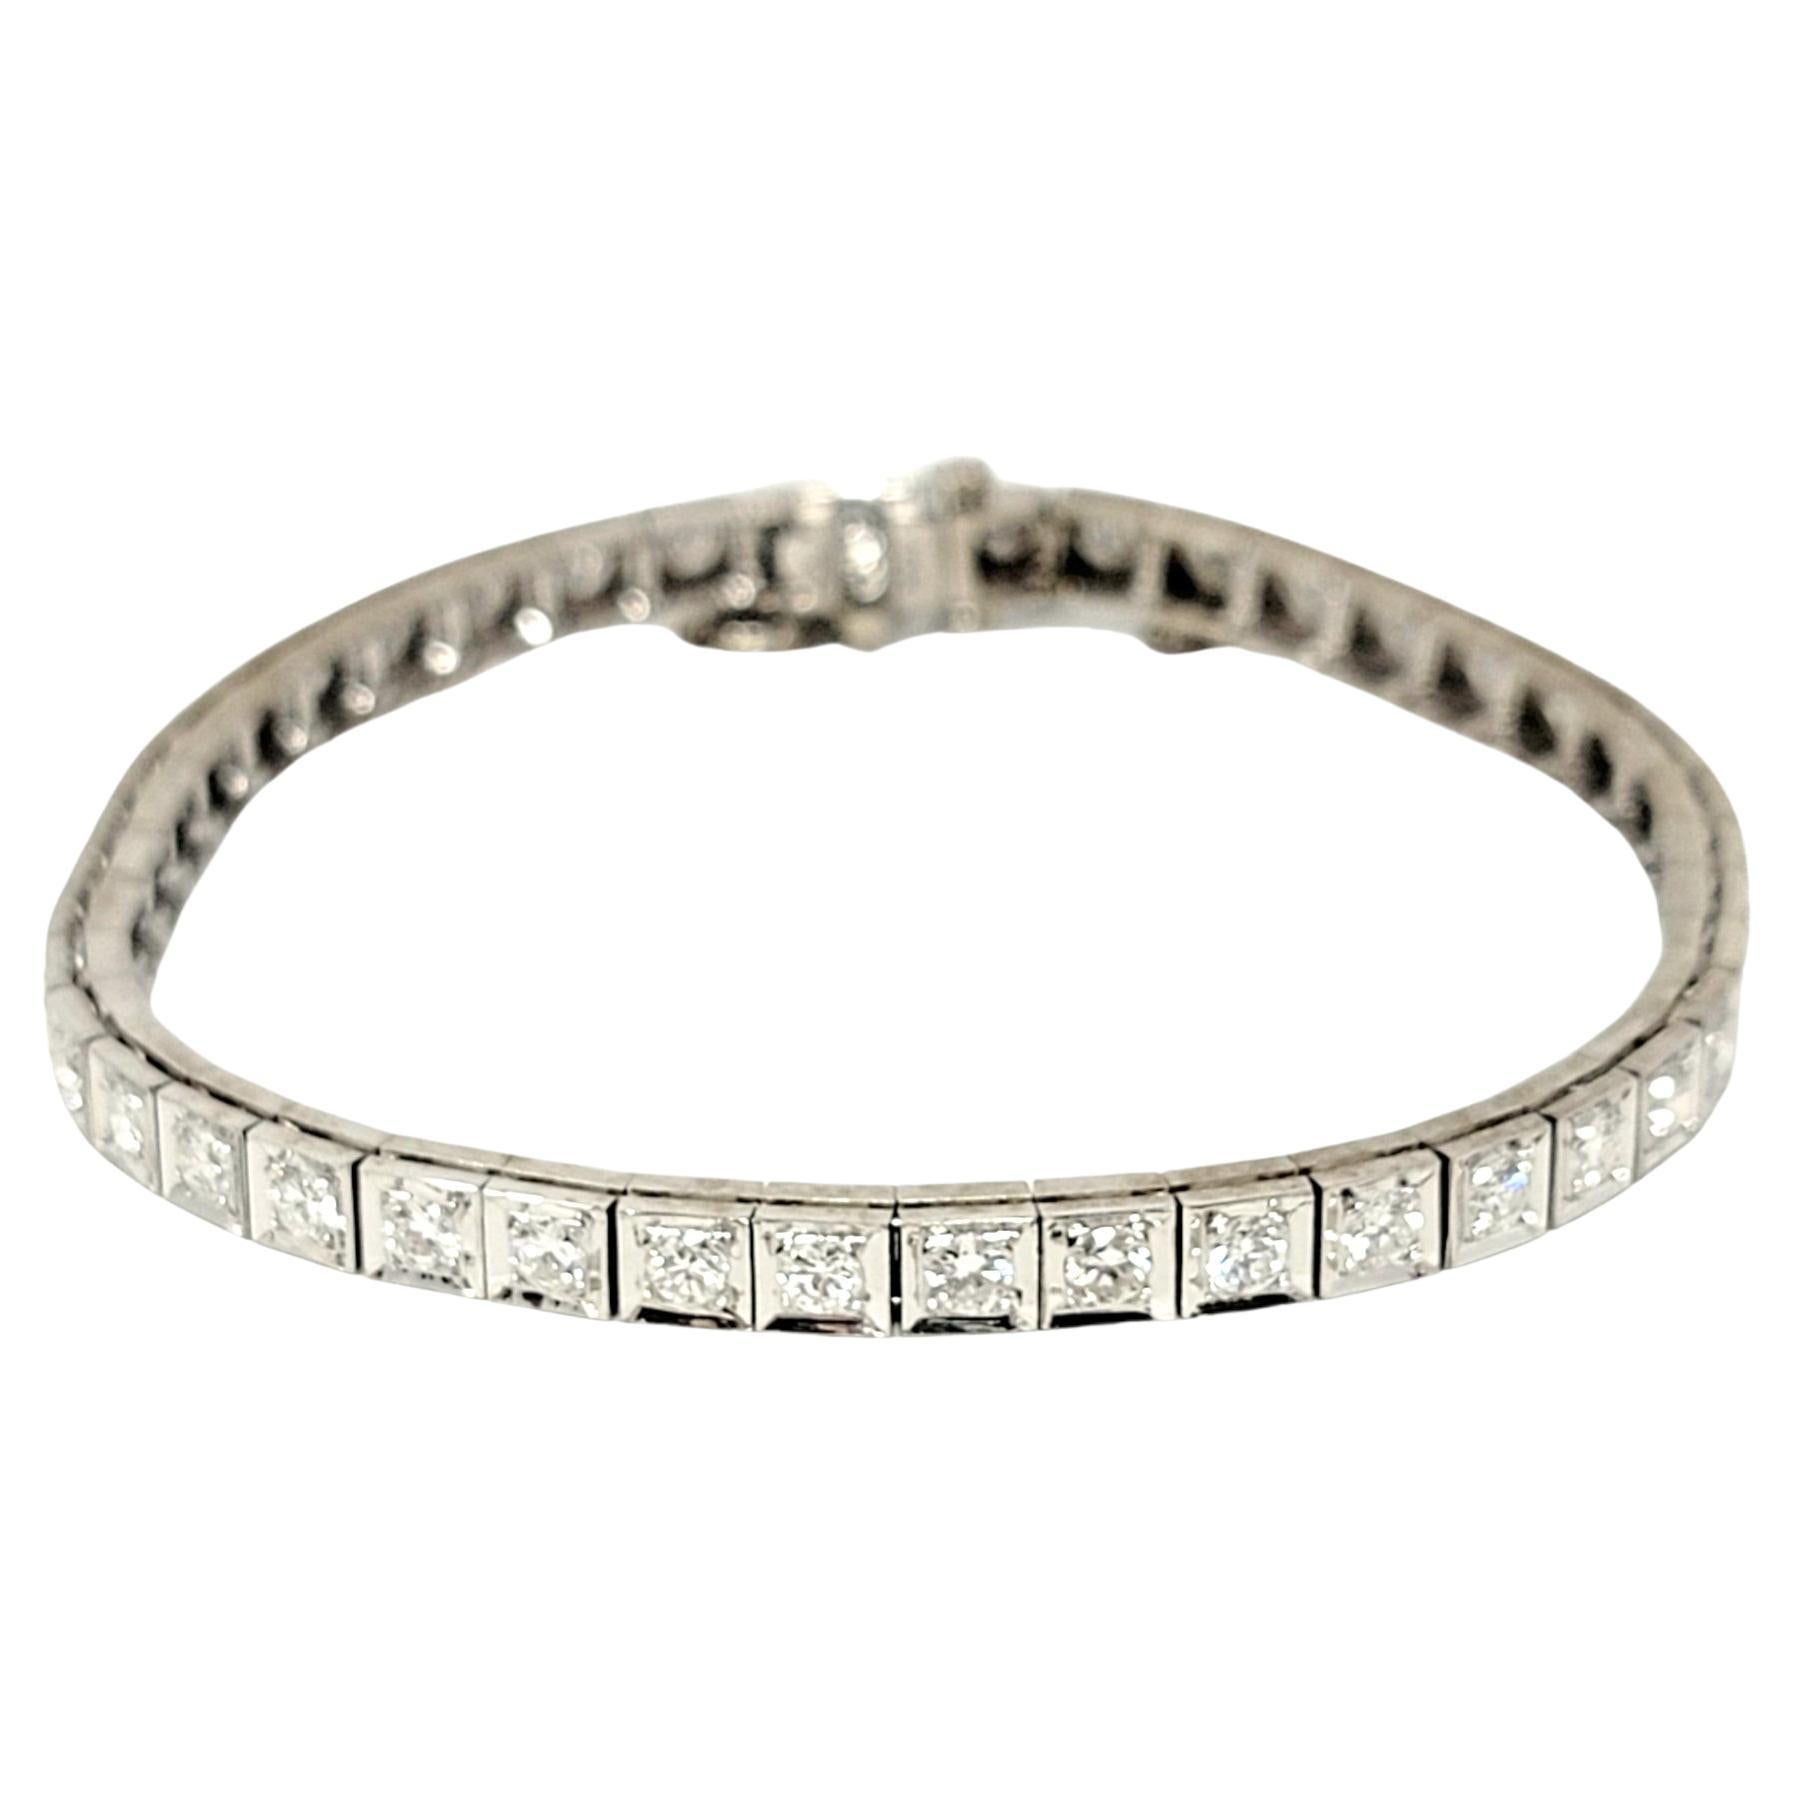 Bracelet tennis en or blanc 14 carats avec diamants ronds brillants de 3,44 carats G-H / VS